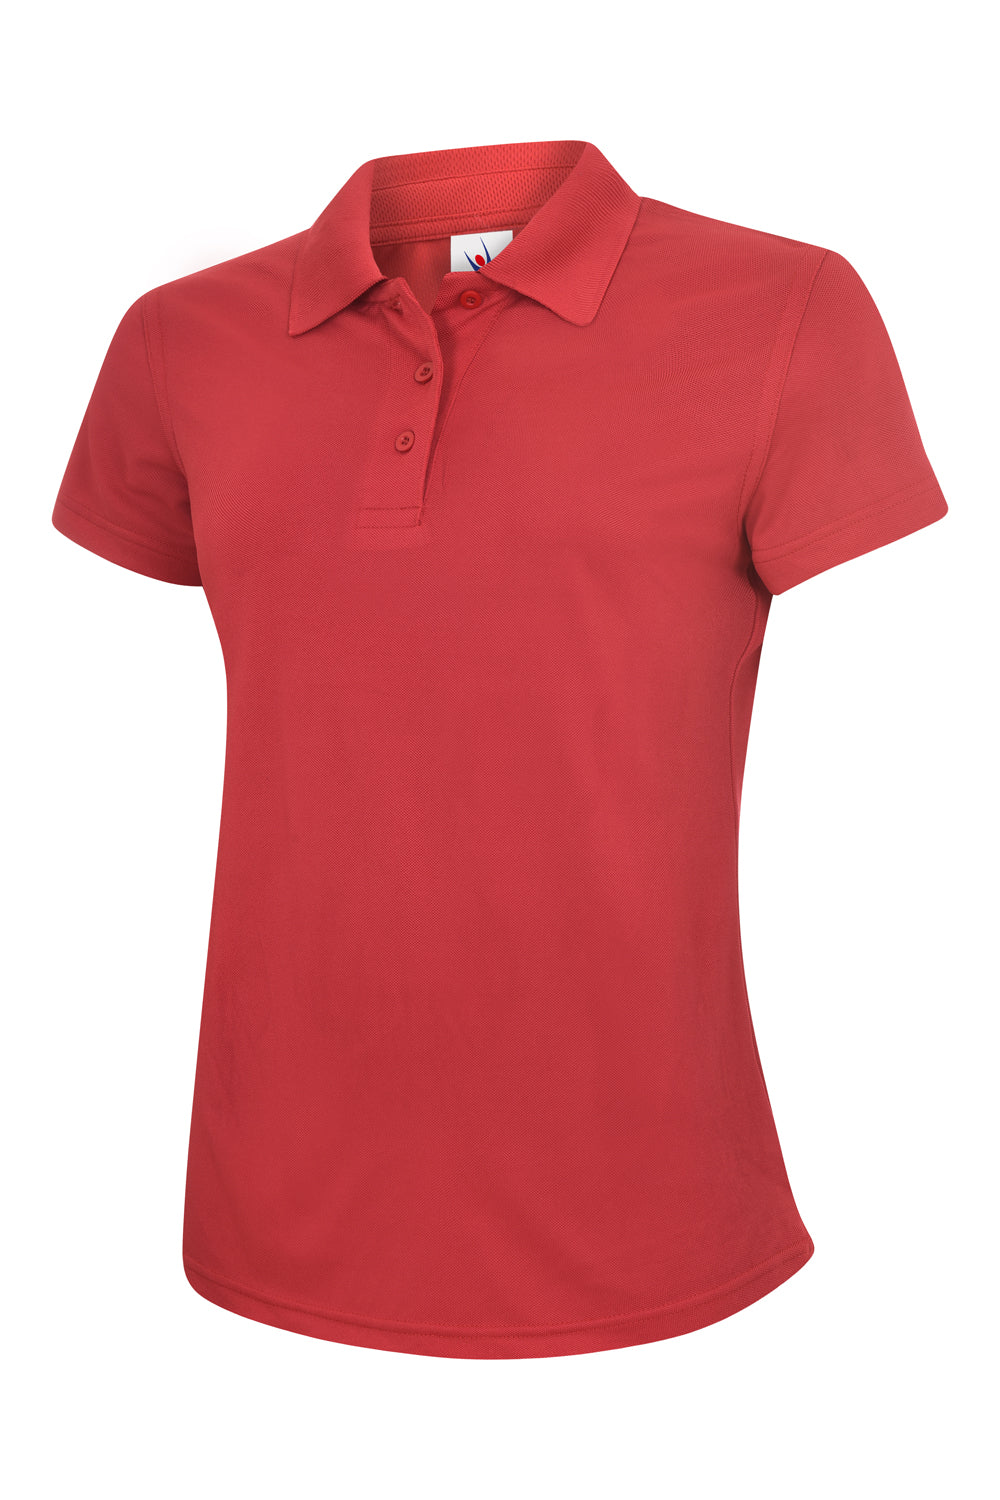 Uneek Ladies Super Cool Workwear Poloshirt UC128 - Red